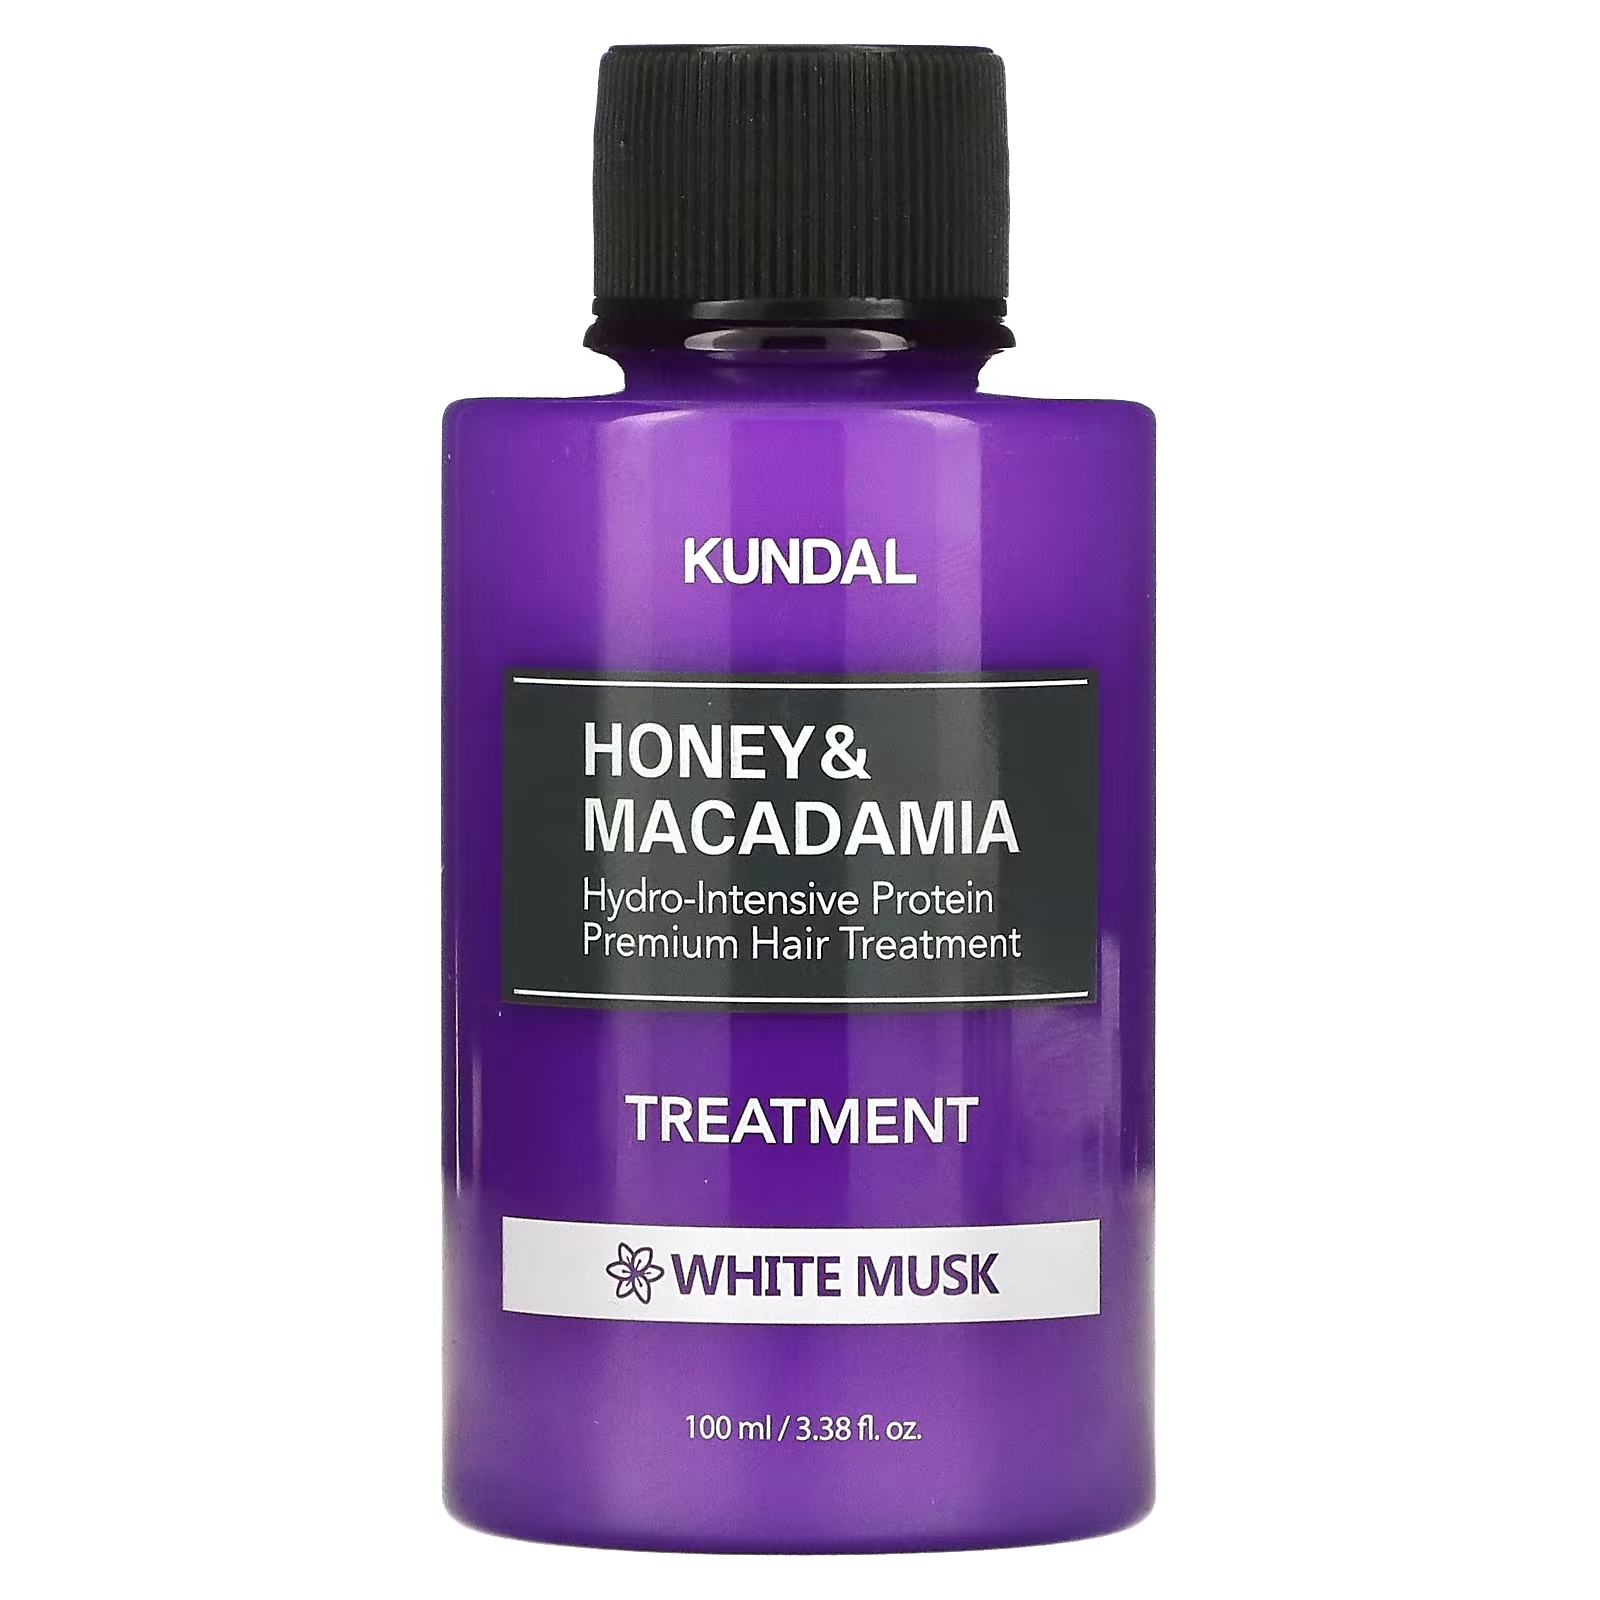 Средство для волос Kundal Honey & Macadamia Treatment белый мускус, 100 мл